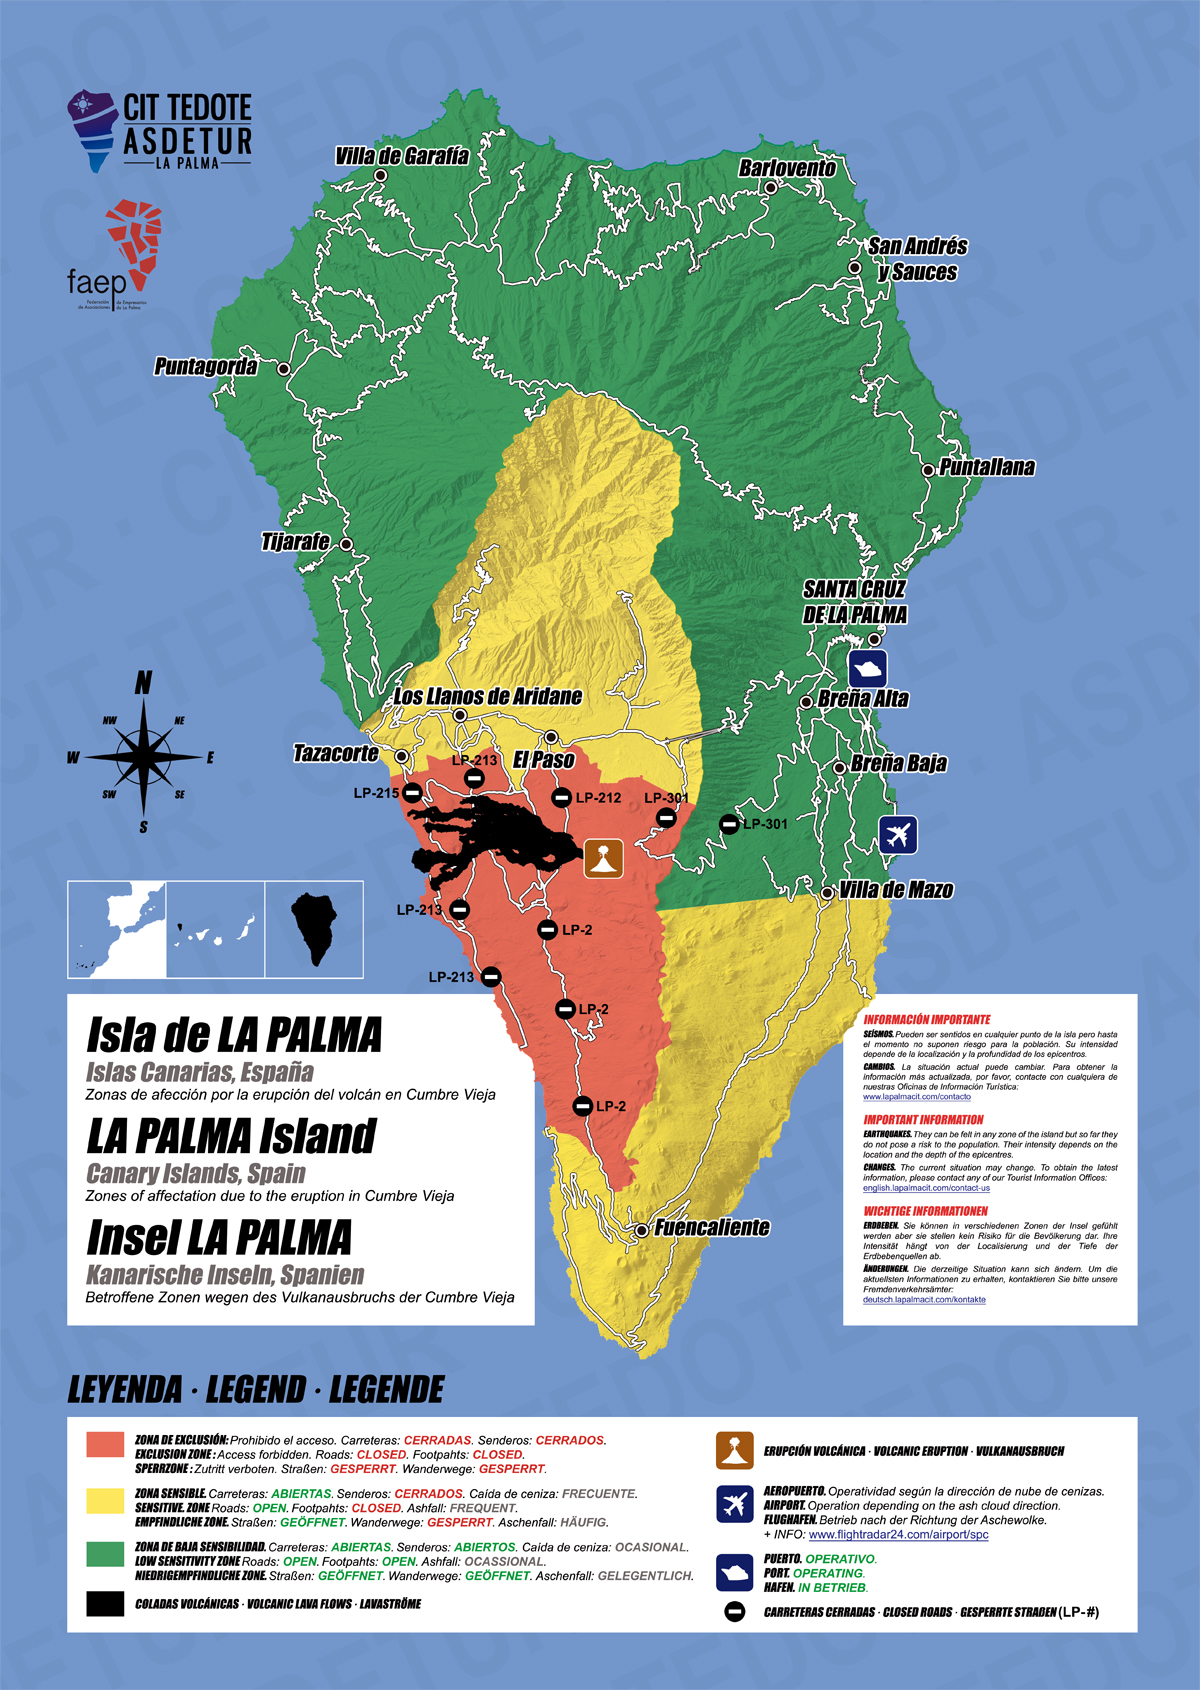 Karte-Vulkan-La-Palma-CIT-Tedote-faep